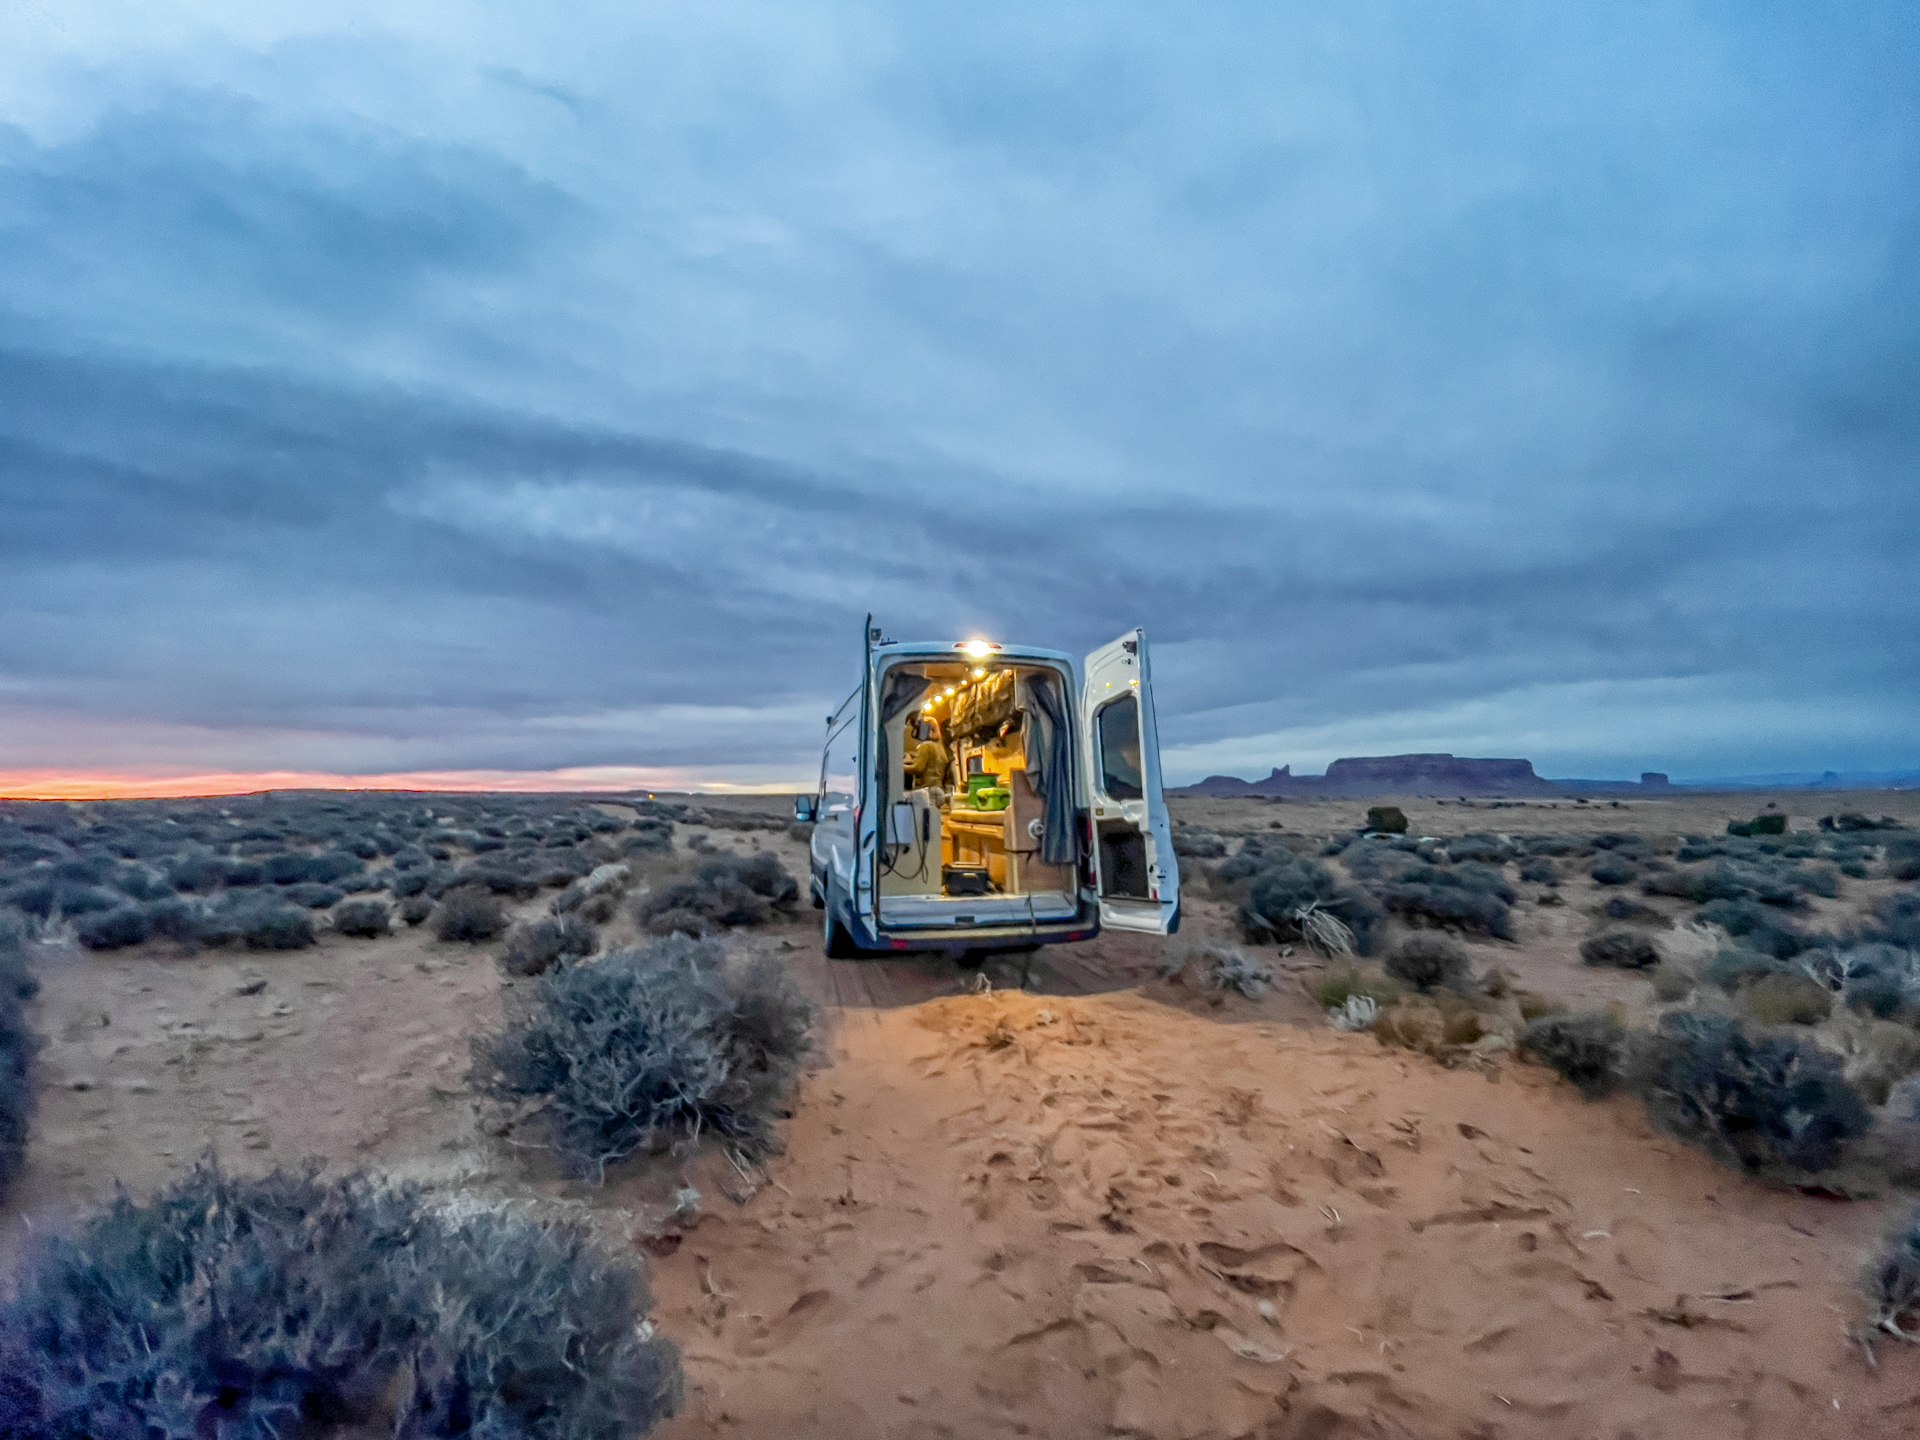 A camper van with open rear doors in the Monument Valley Desert, Utah & Arizona, USA